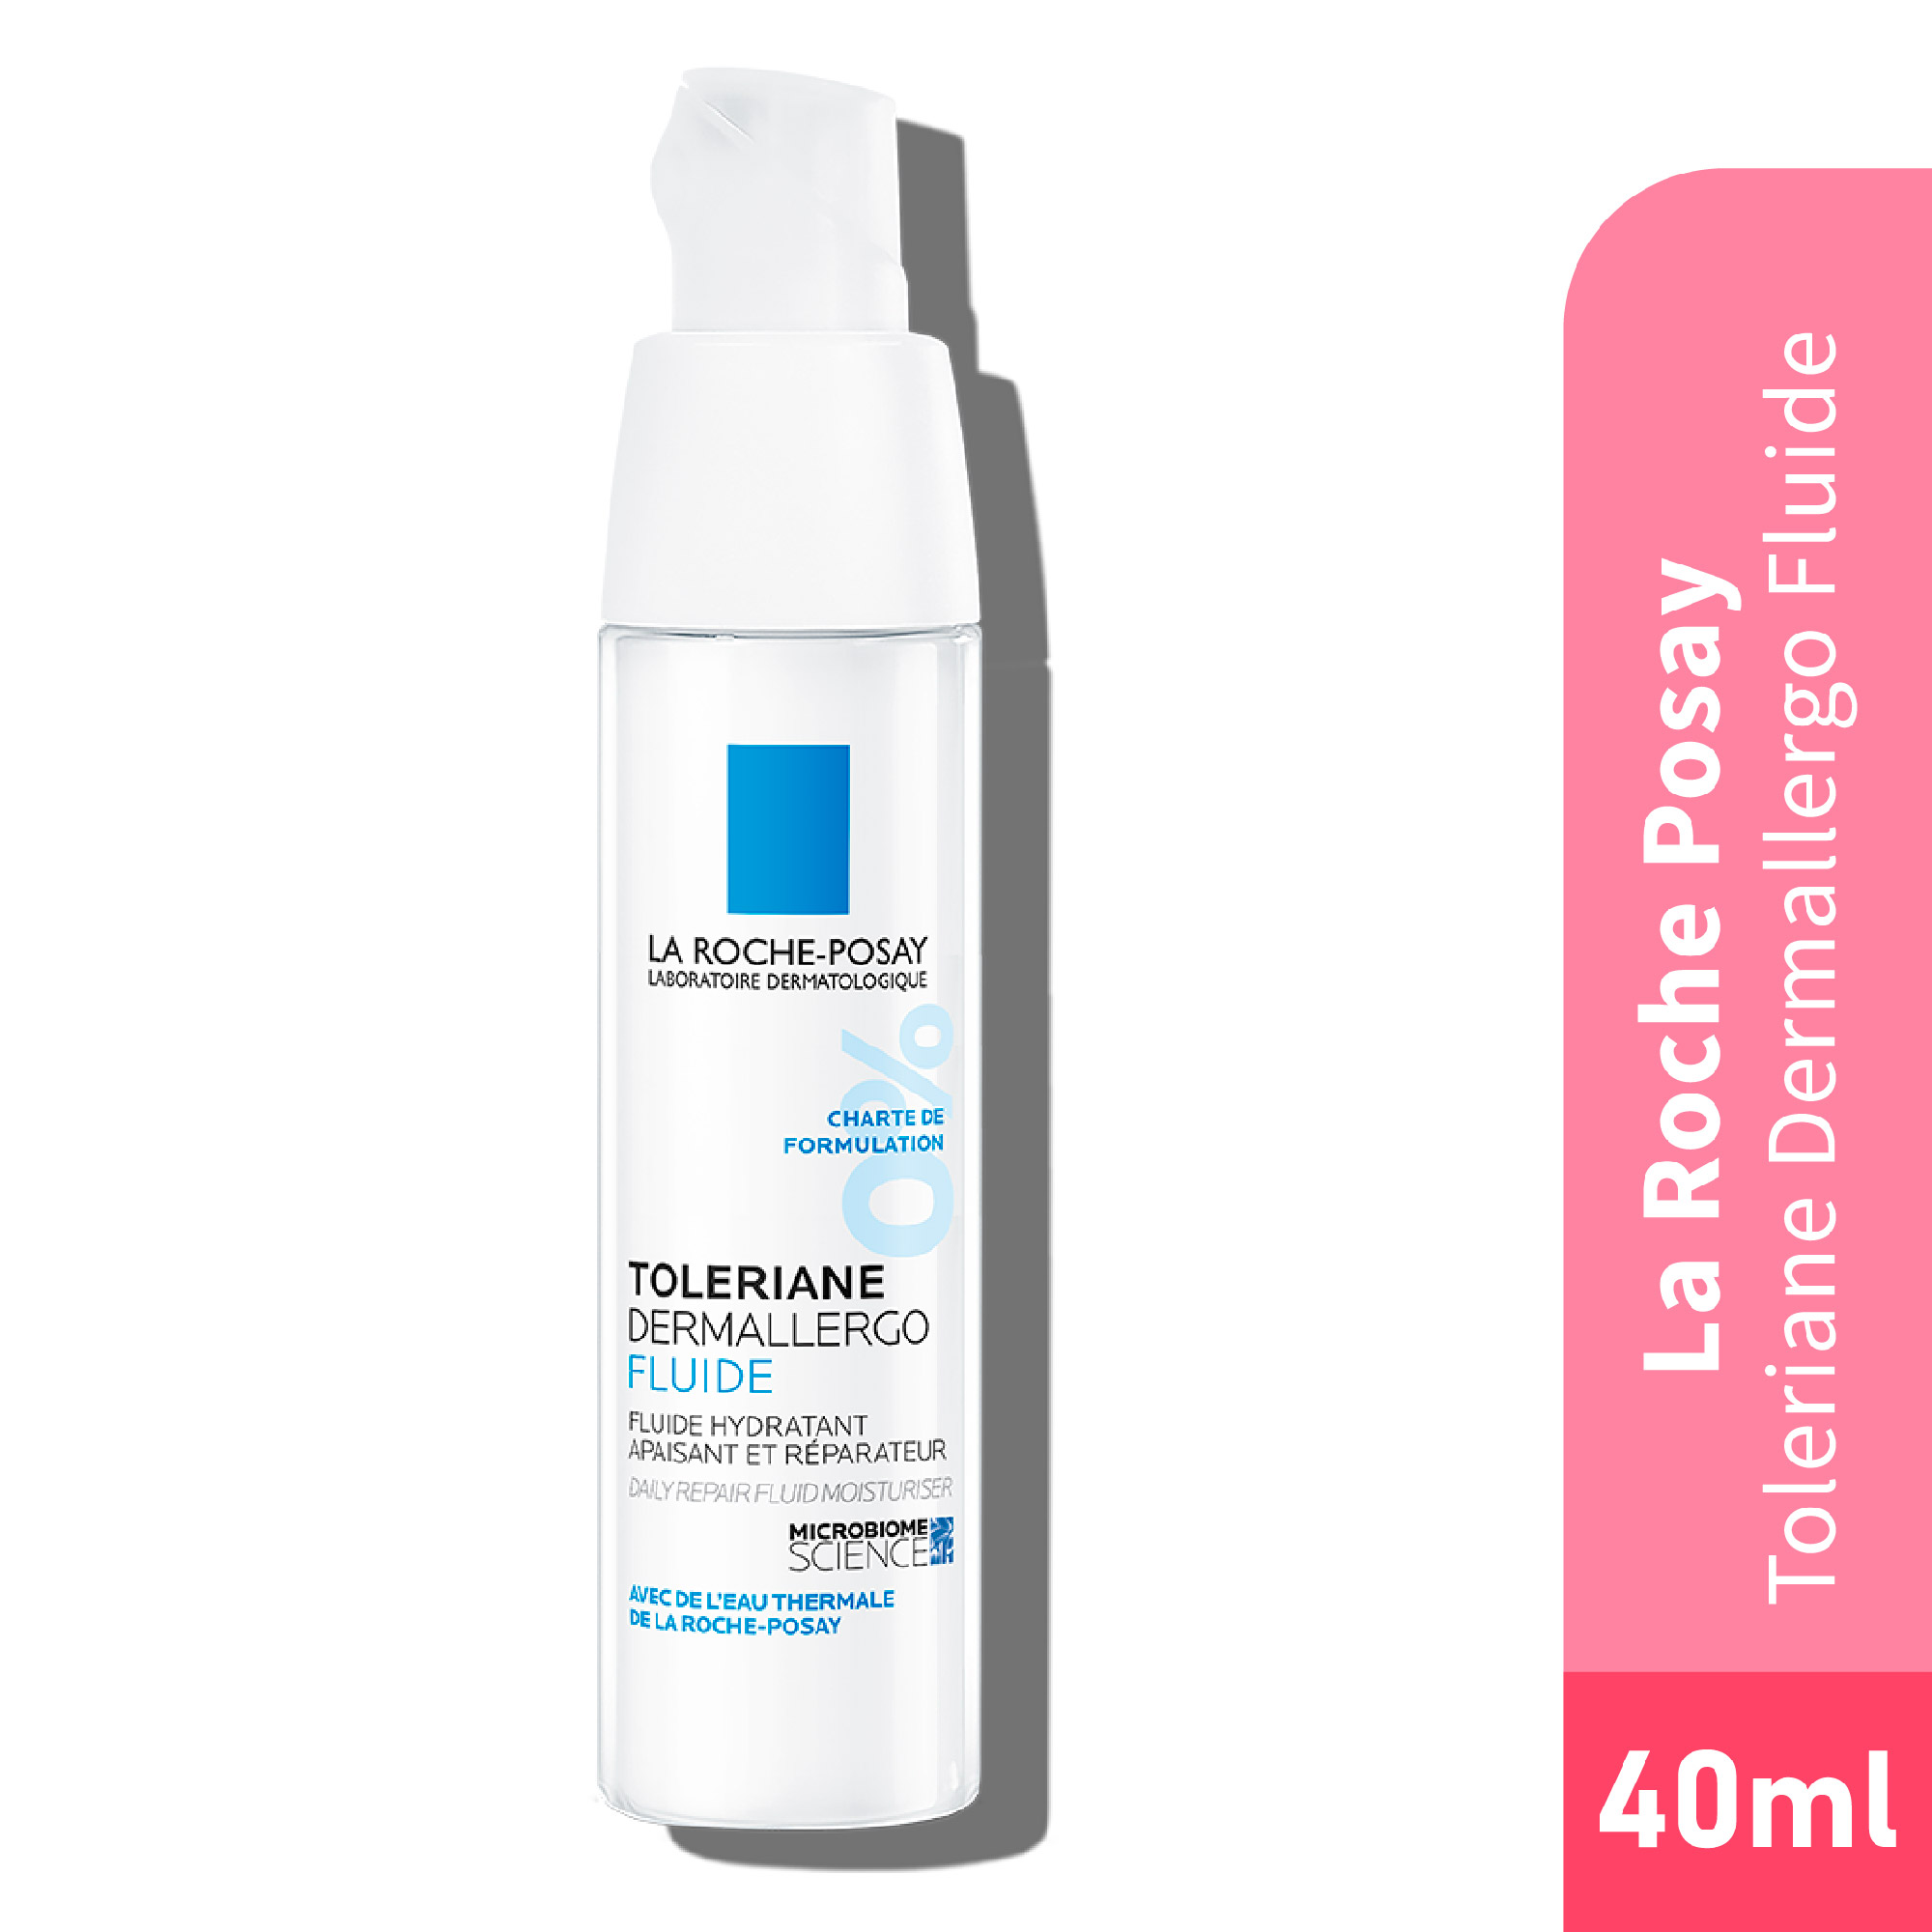 LA ROCHE POSAY Toleriane Dermallergo Fluide Moisturizer 40ml - Fluid Moisturizer For Sensitive, Oily Skin 乳液